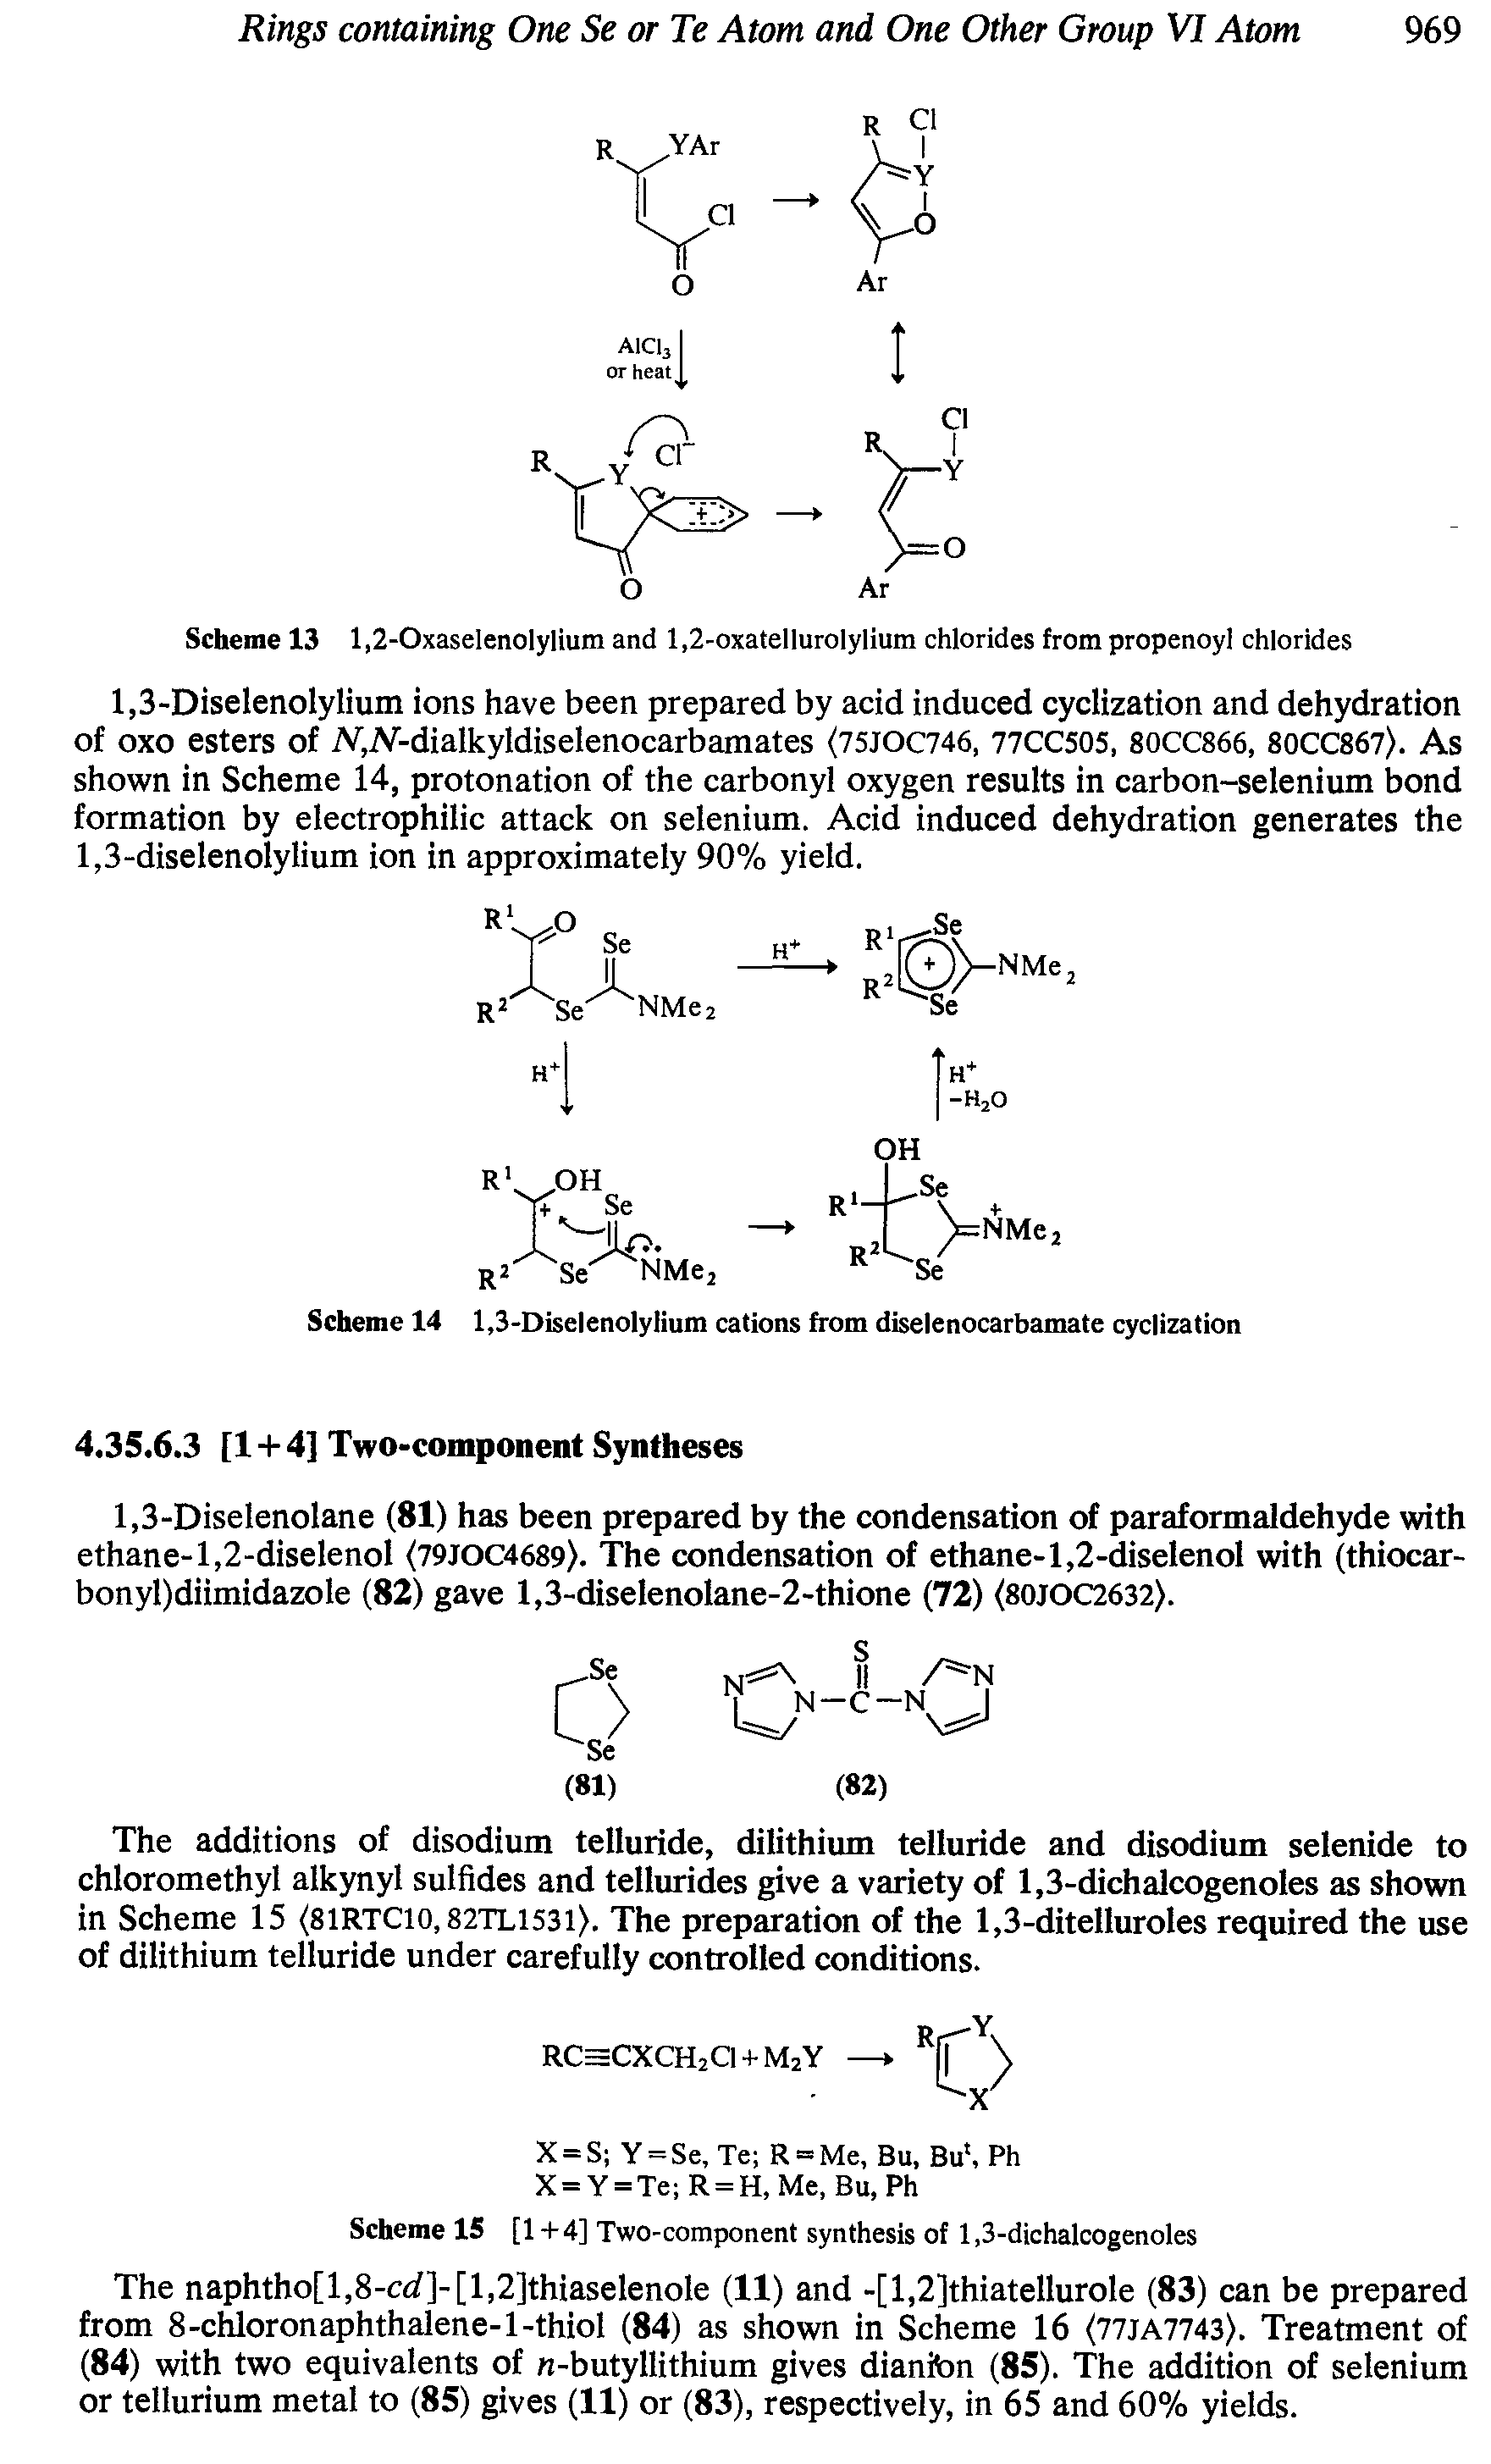 Scheme 13 1,2-Oxaselenolylium and 1,2-oxatellurolylium chlorides from propenoyl chlorides...